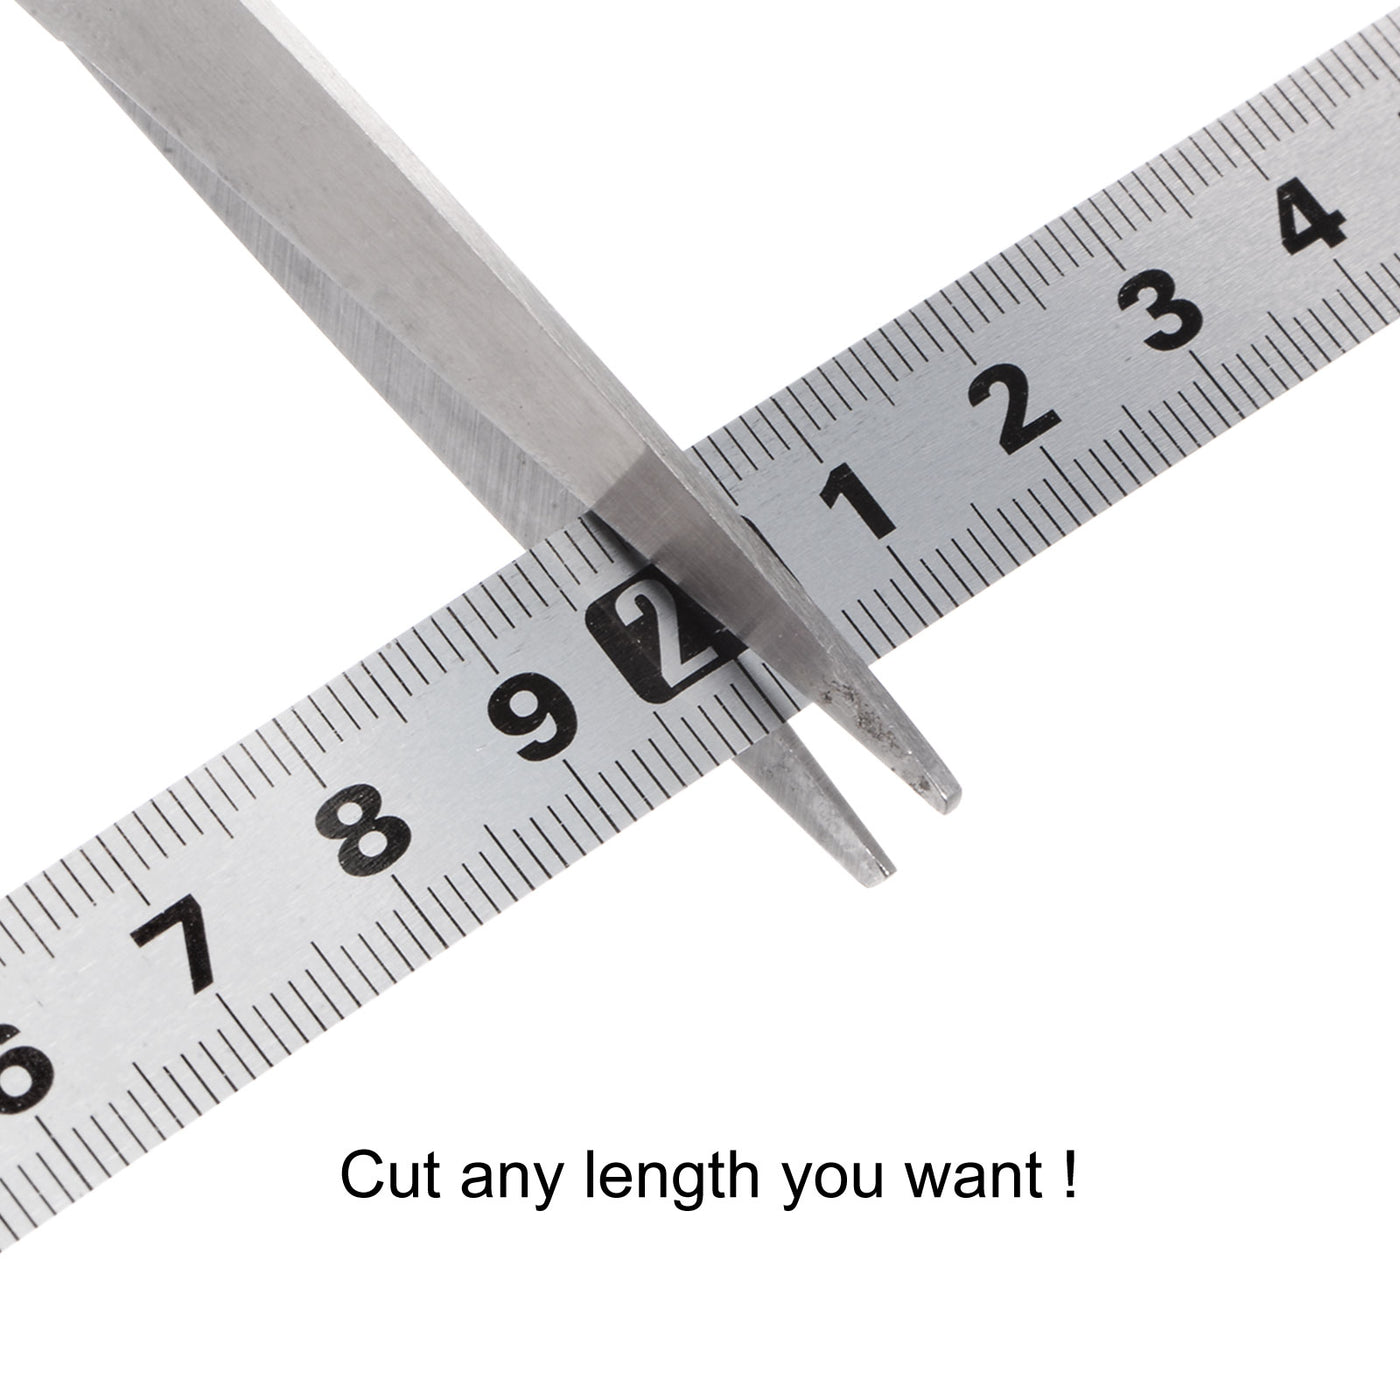 Harfington Self-Adhesive Measuring Tape 200cm Metric Left to Right